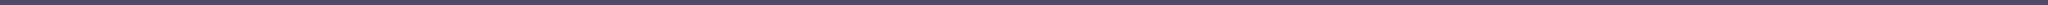 CFGeneral_purplebar